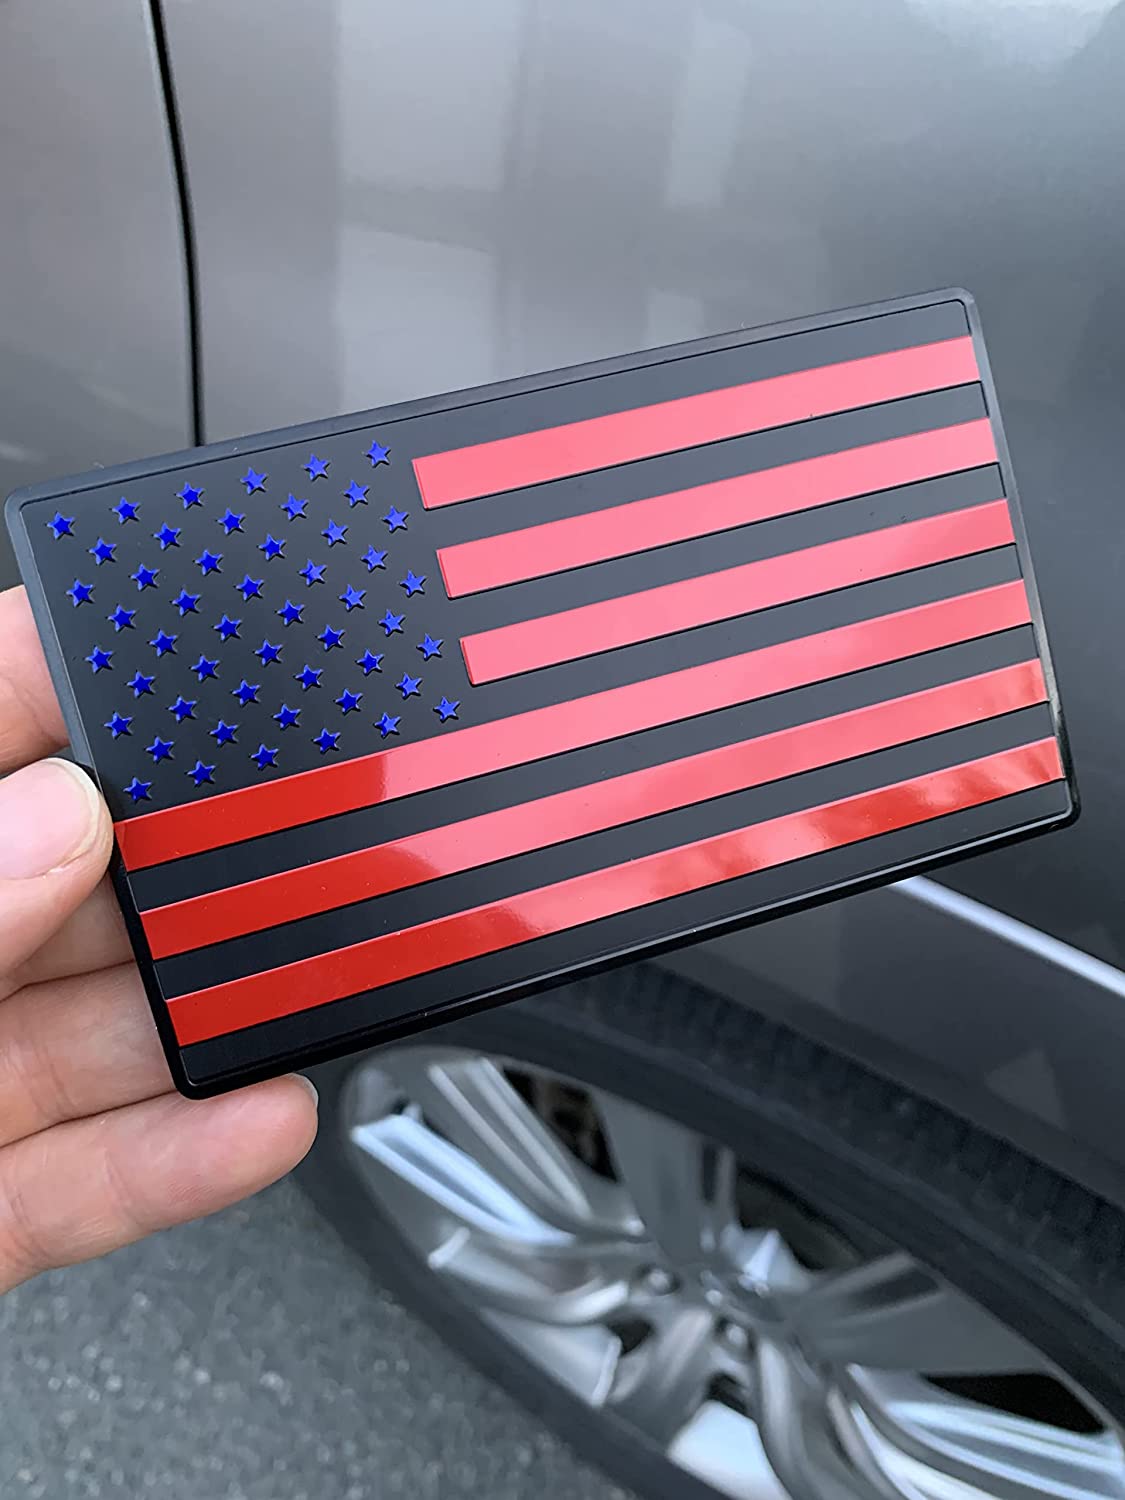 USA American 3D Metal Flag Auto Emblem for Cars Trucks 2pcs Forward and Reverse Set (5"x3", Black Red Blue)